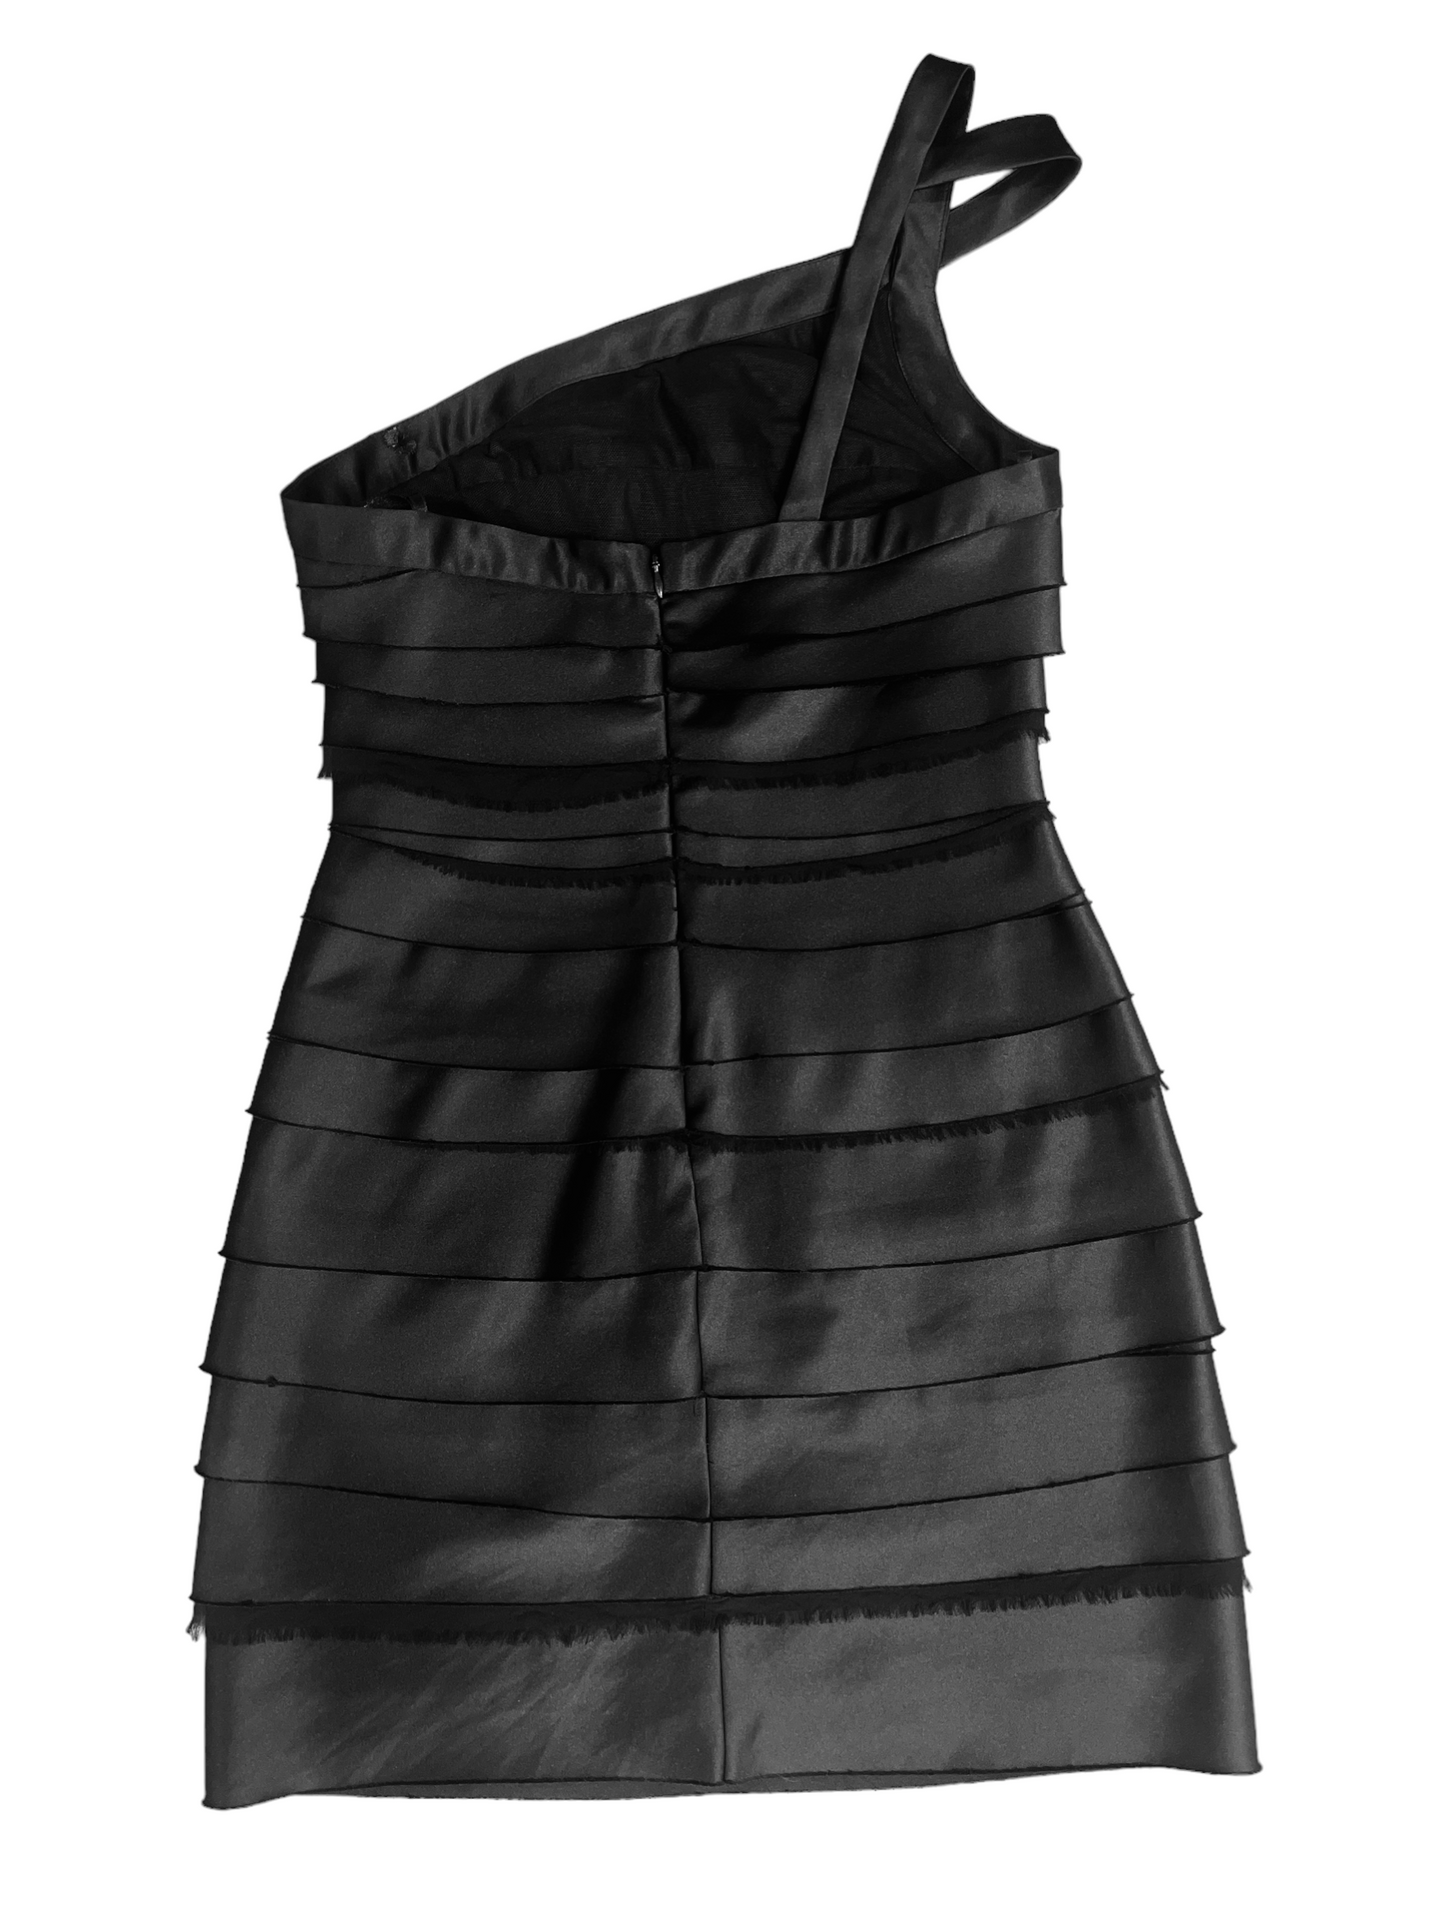 BCBG Maxazria Black Ruched One Shoulder Cocktail Dress Size 4